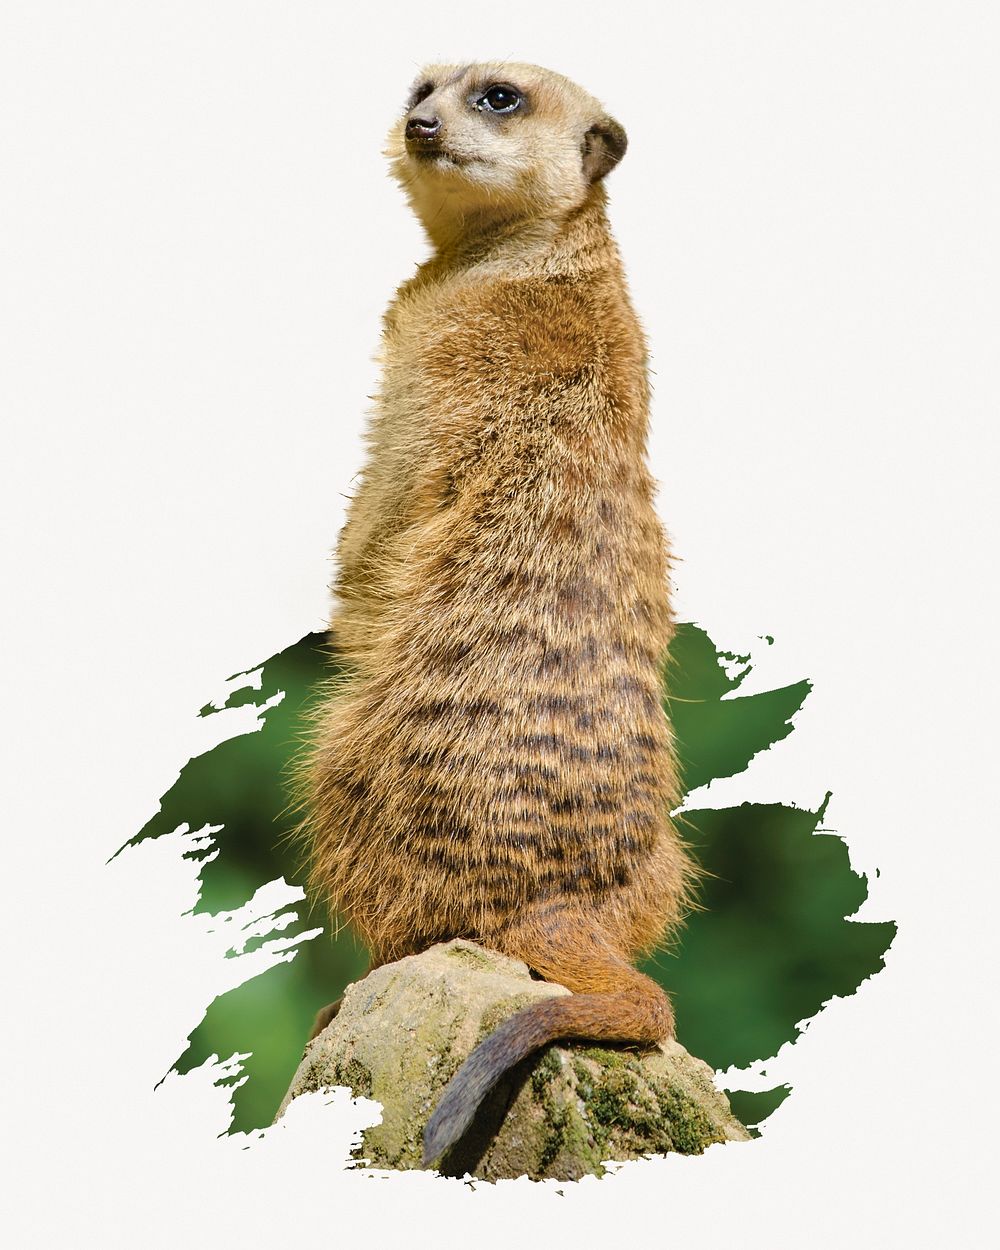 Meerkat, animal photo on white background